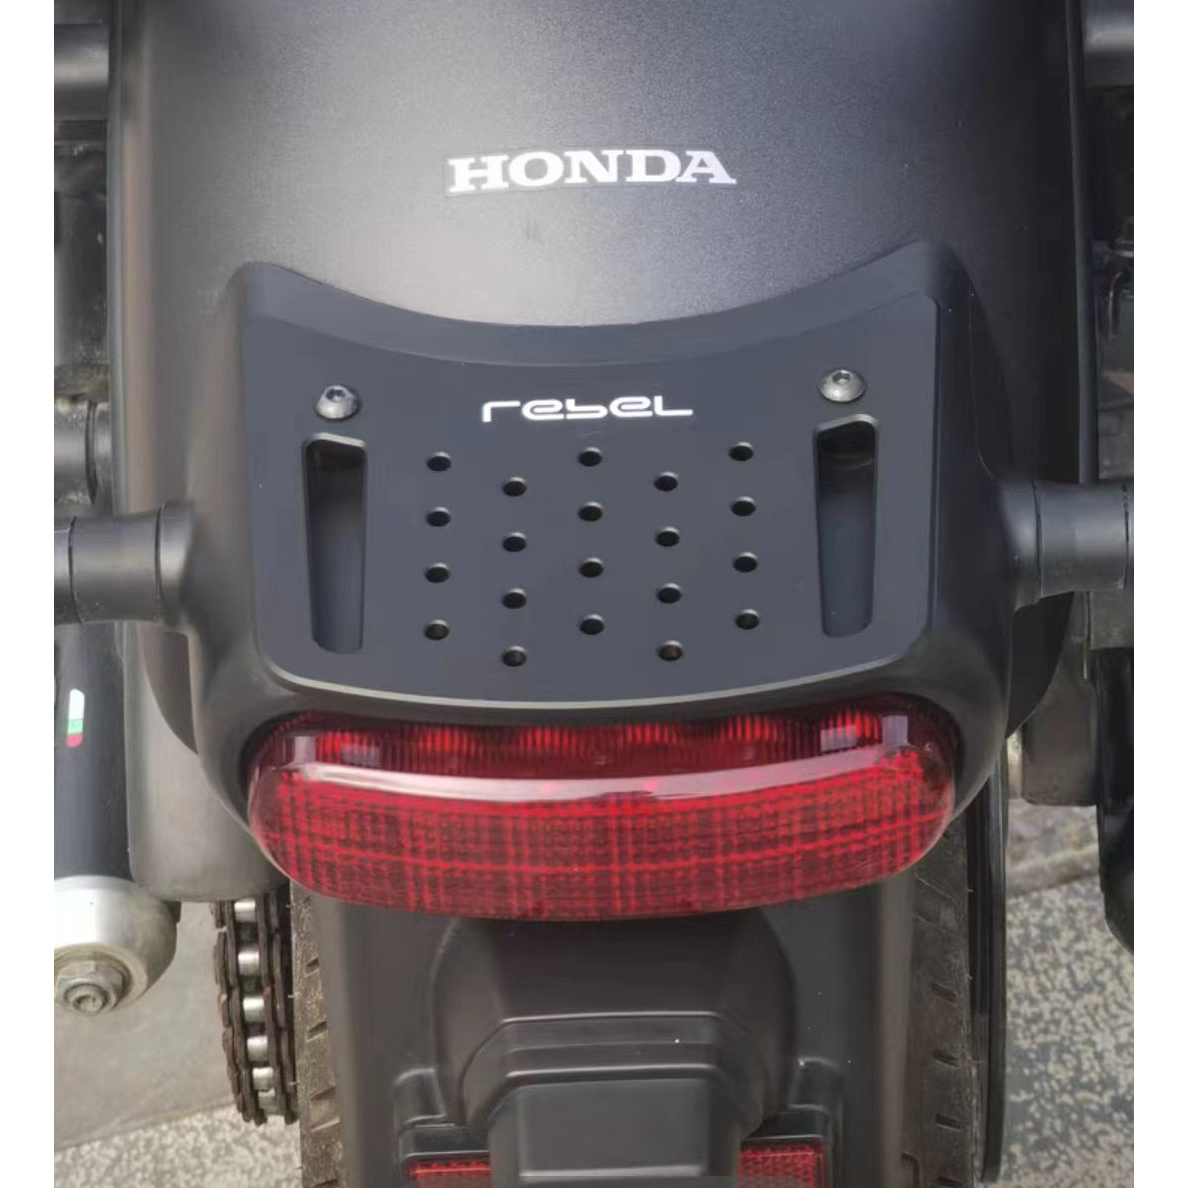 Rebel 1100T DCT黑色尾燈燈罩 適用於 Honda Rebel 1100T改裝方向燈罩 Rebel 1100